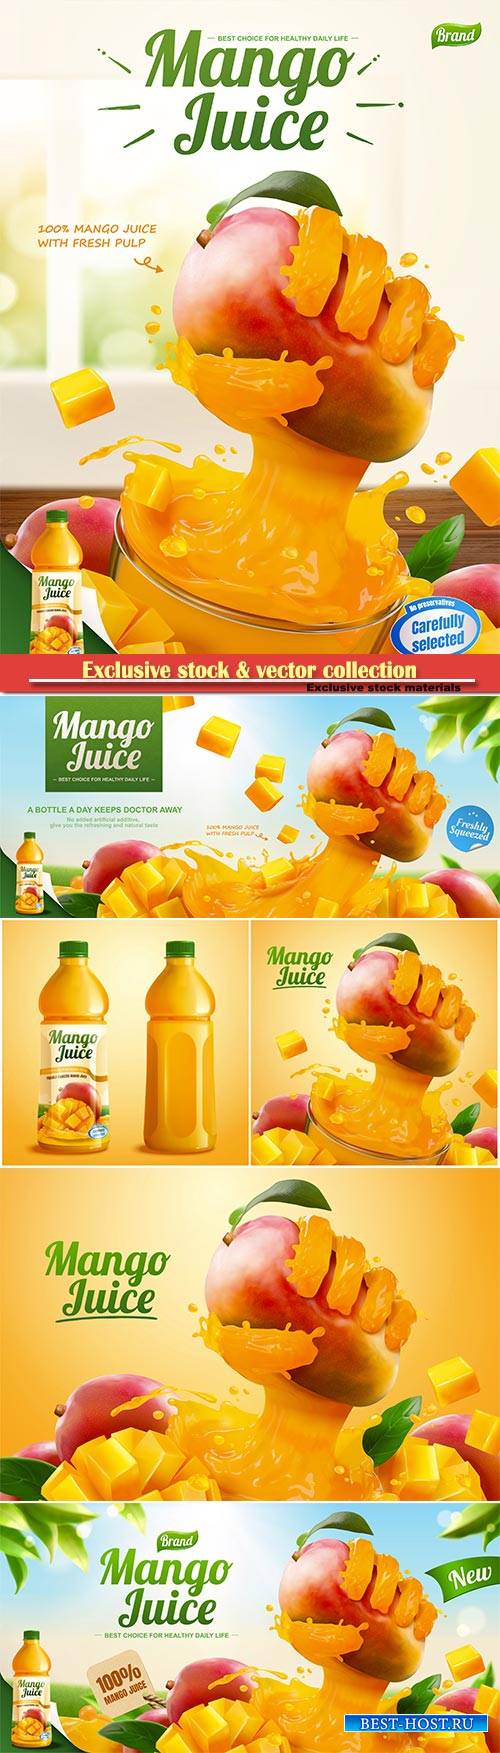 Mango juice banner ads with liquid hand grabbing fruit effect in 3d vector illustration